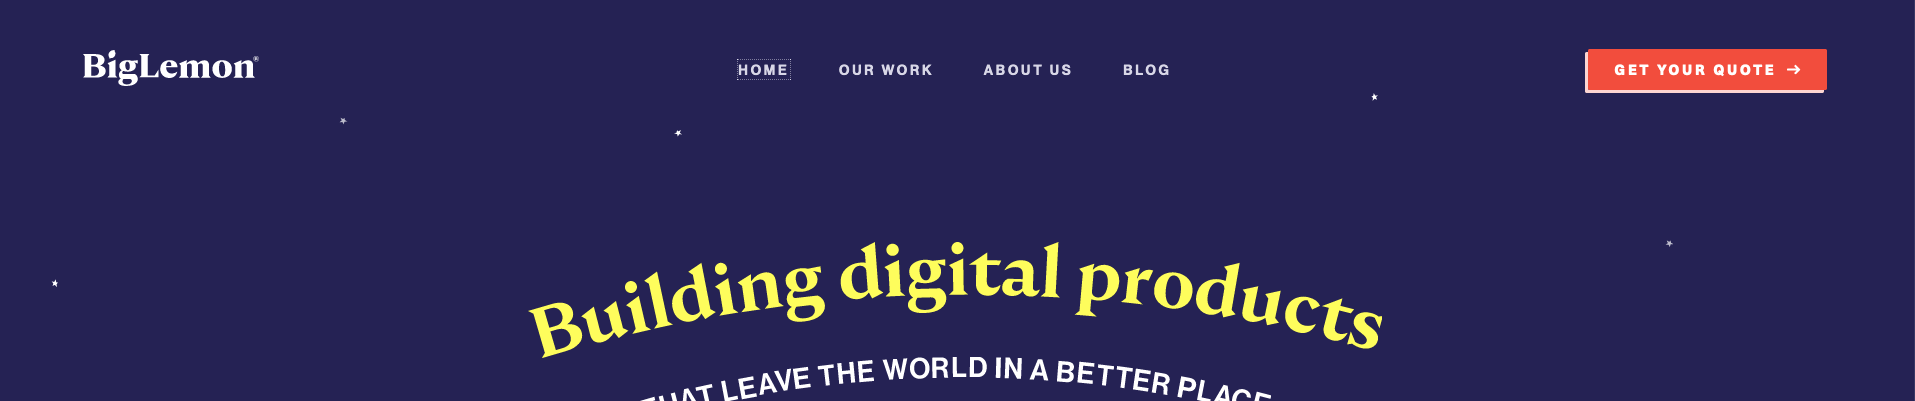 Building digital products big lemon website